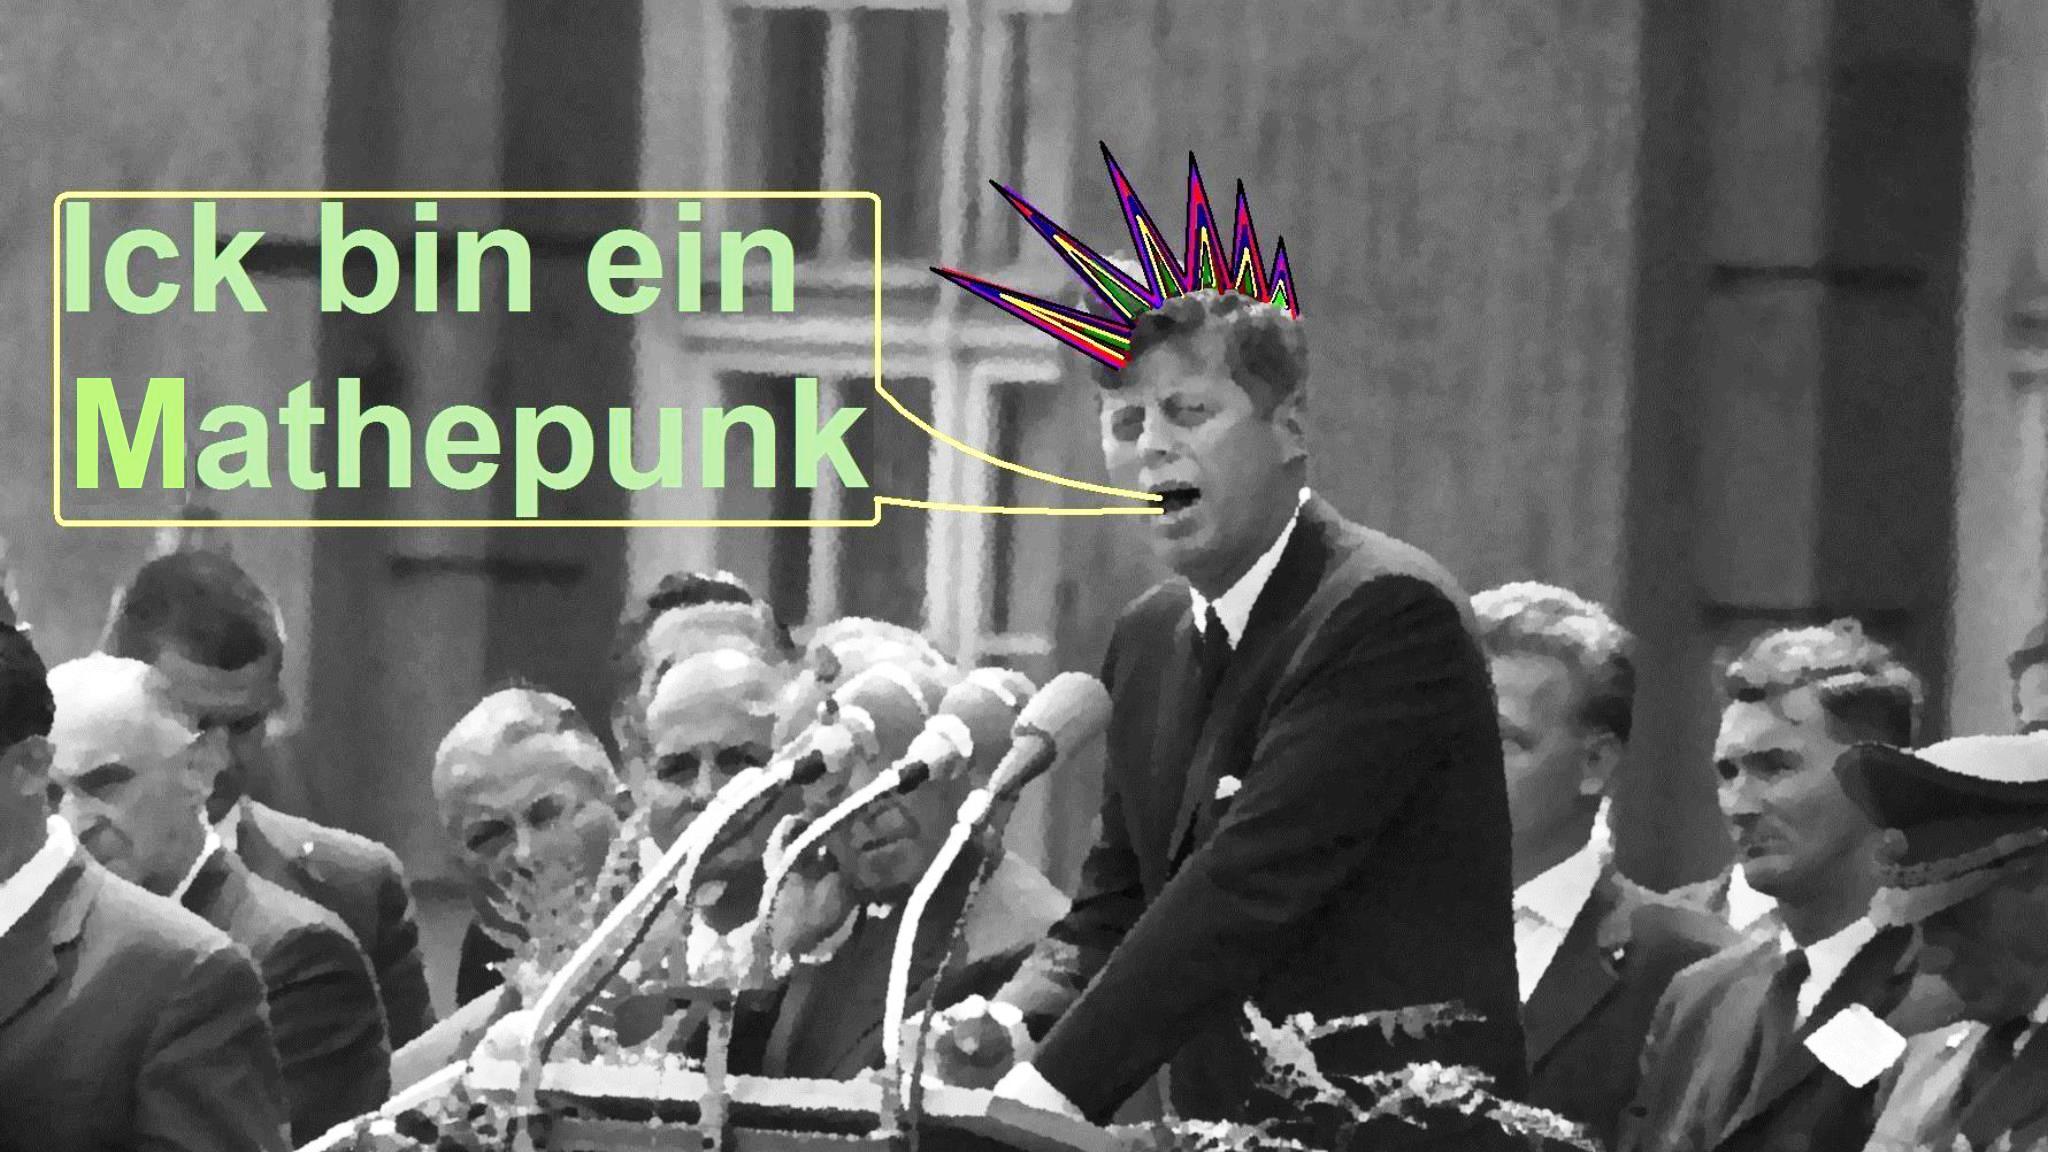 Ick bin ein Mathepunk.  Ansprache JFK am  23. Juni 1963 in Berlin